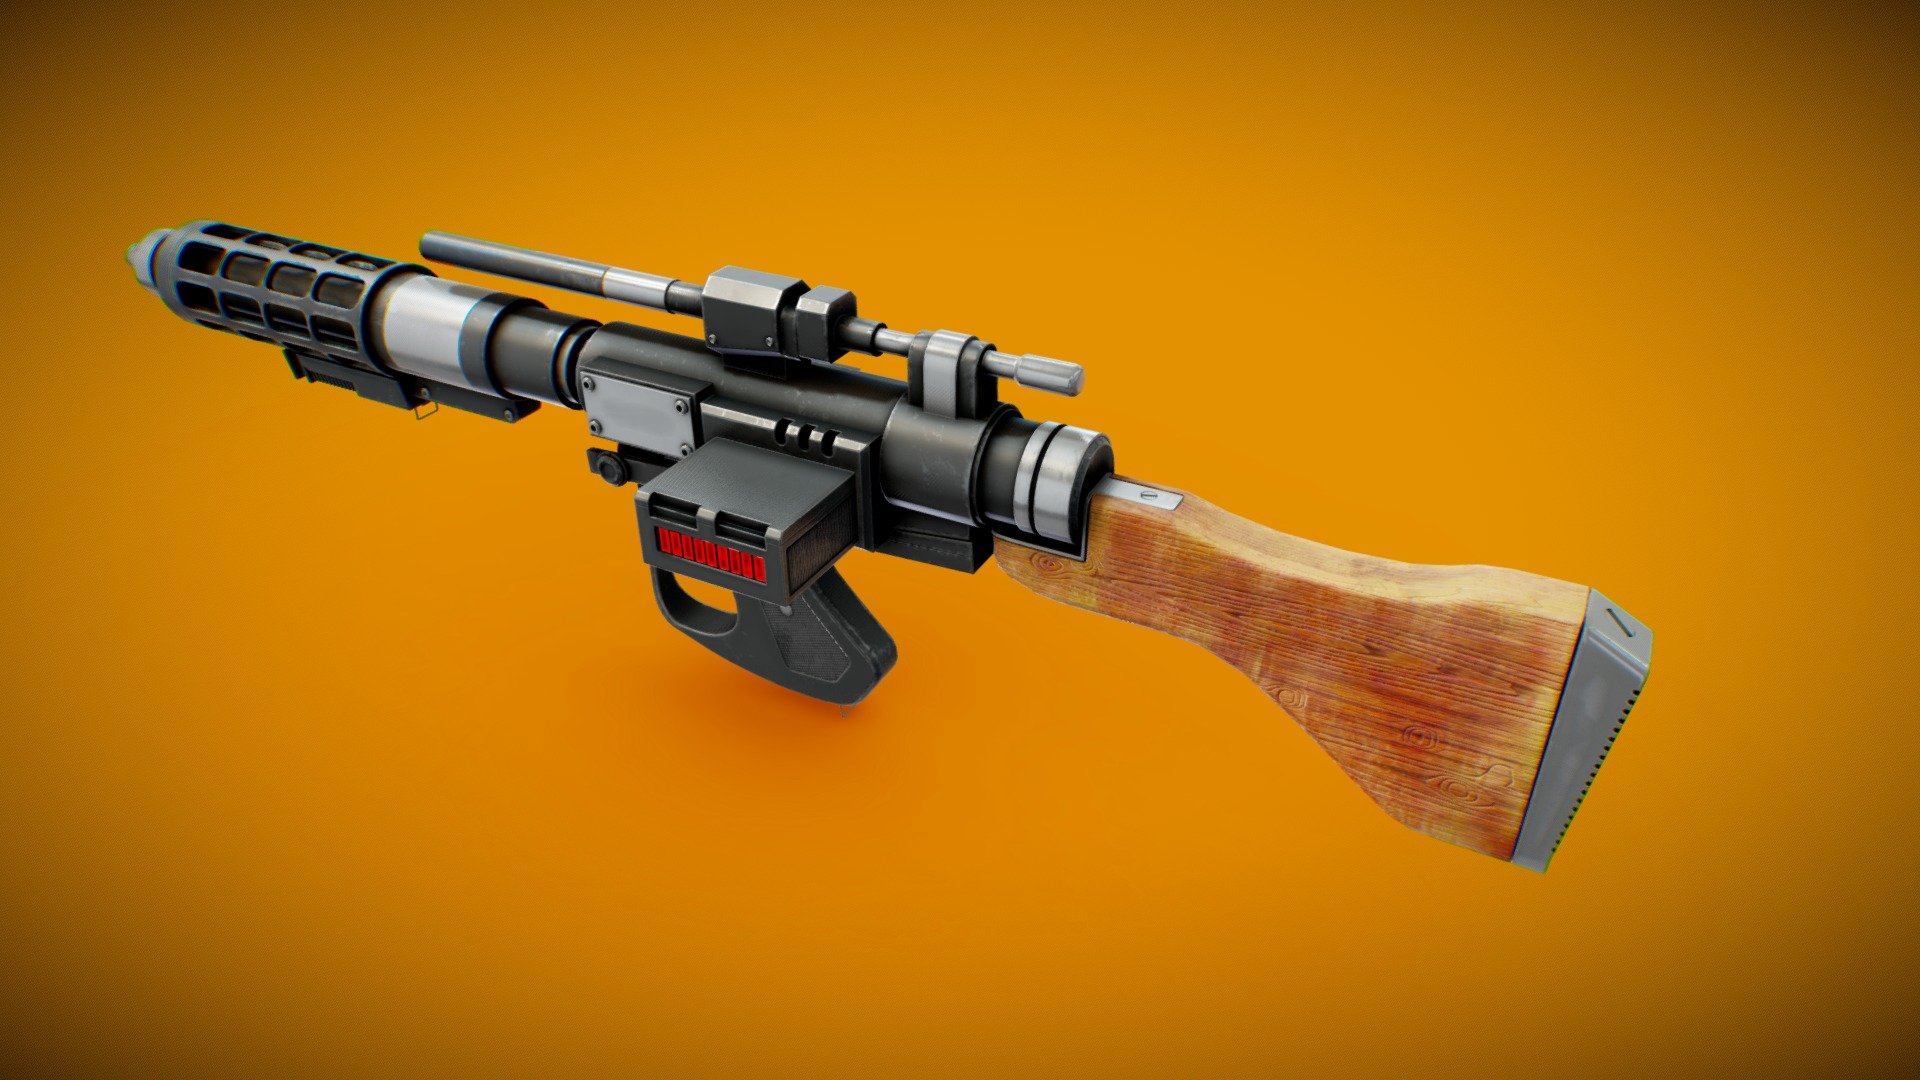 E5c Heavy Blaster Rifle Star Wars Download Free 3d Model By Forkyforklift C5c1563 Sketchfab